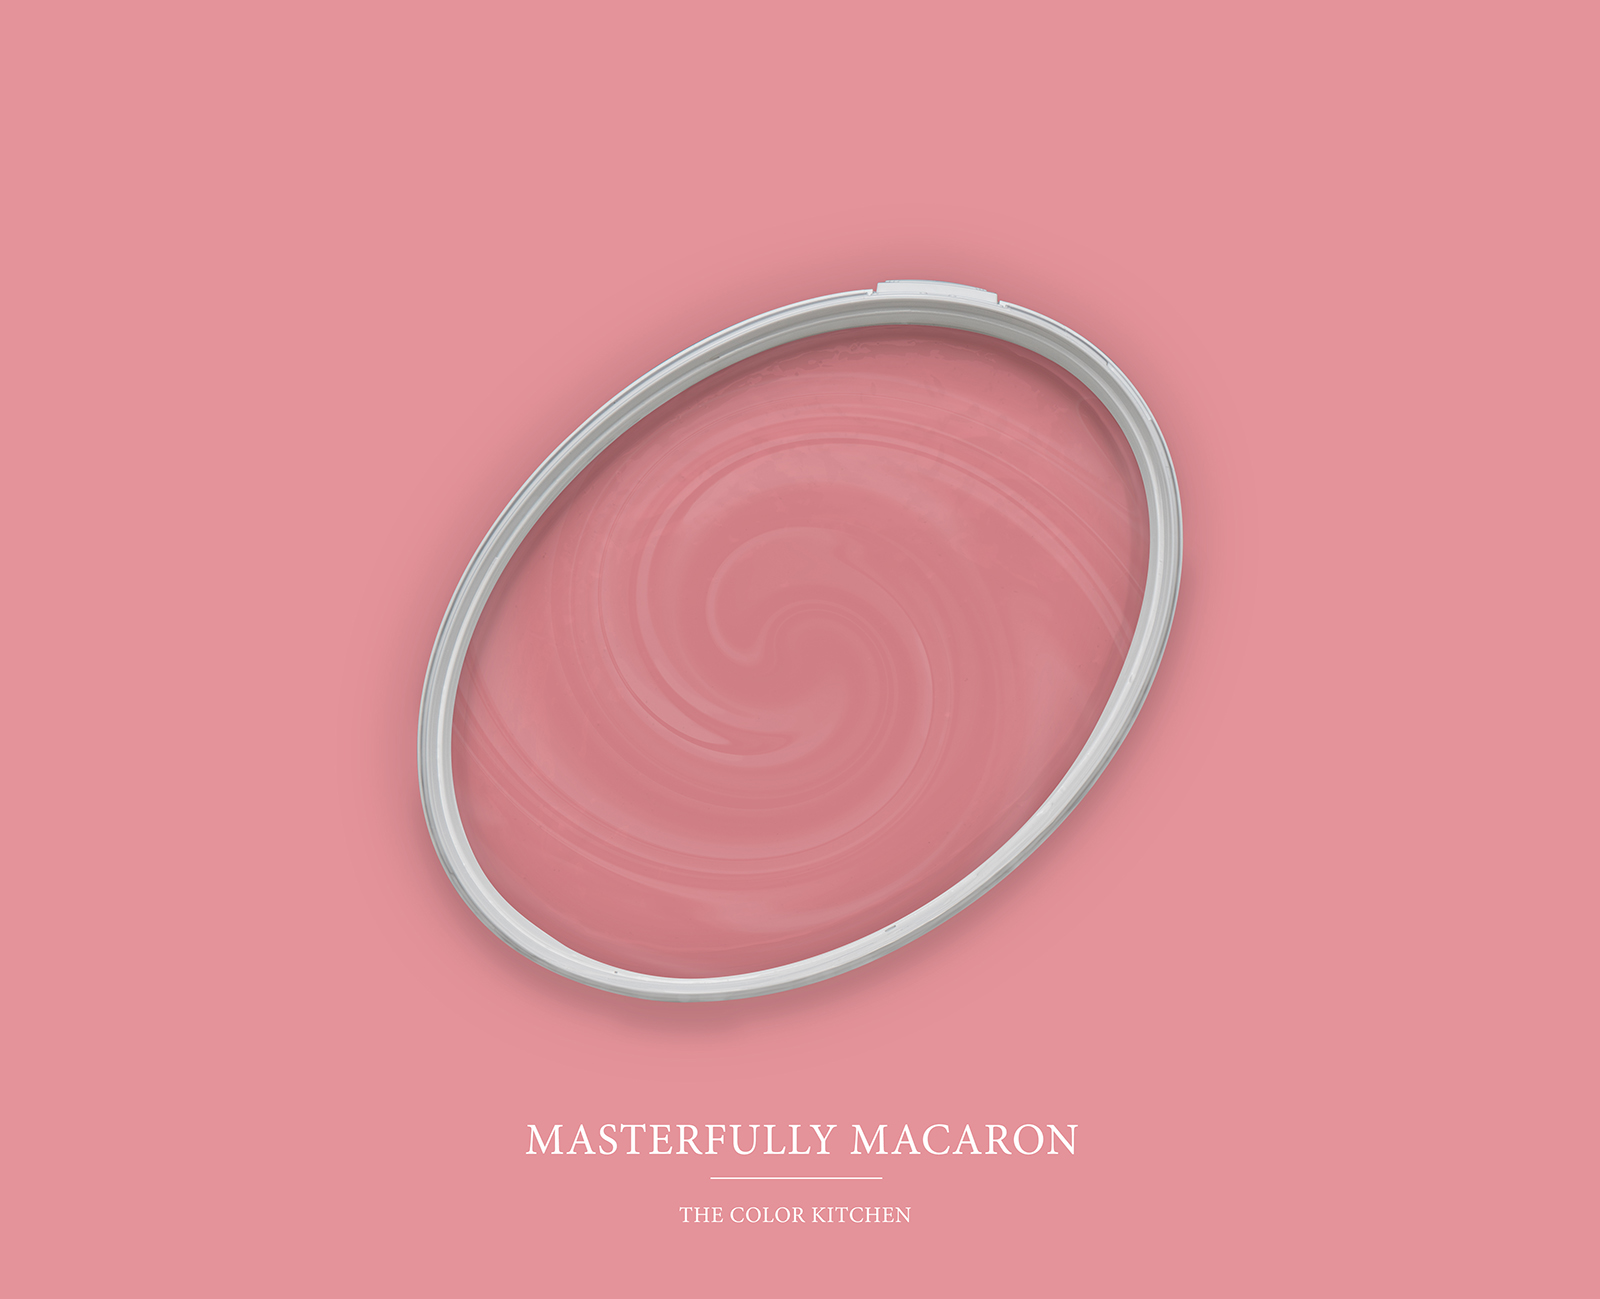 Muurverf TCK7010 »Masterfully Macaron« in levendig roze – 5,0 liter
